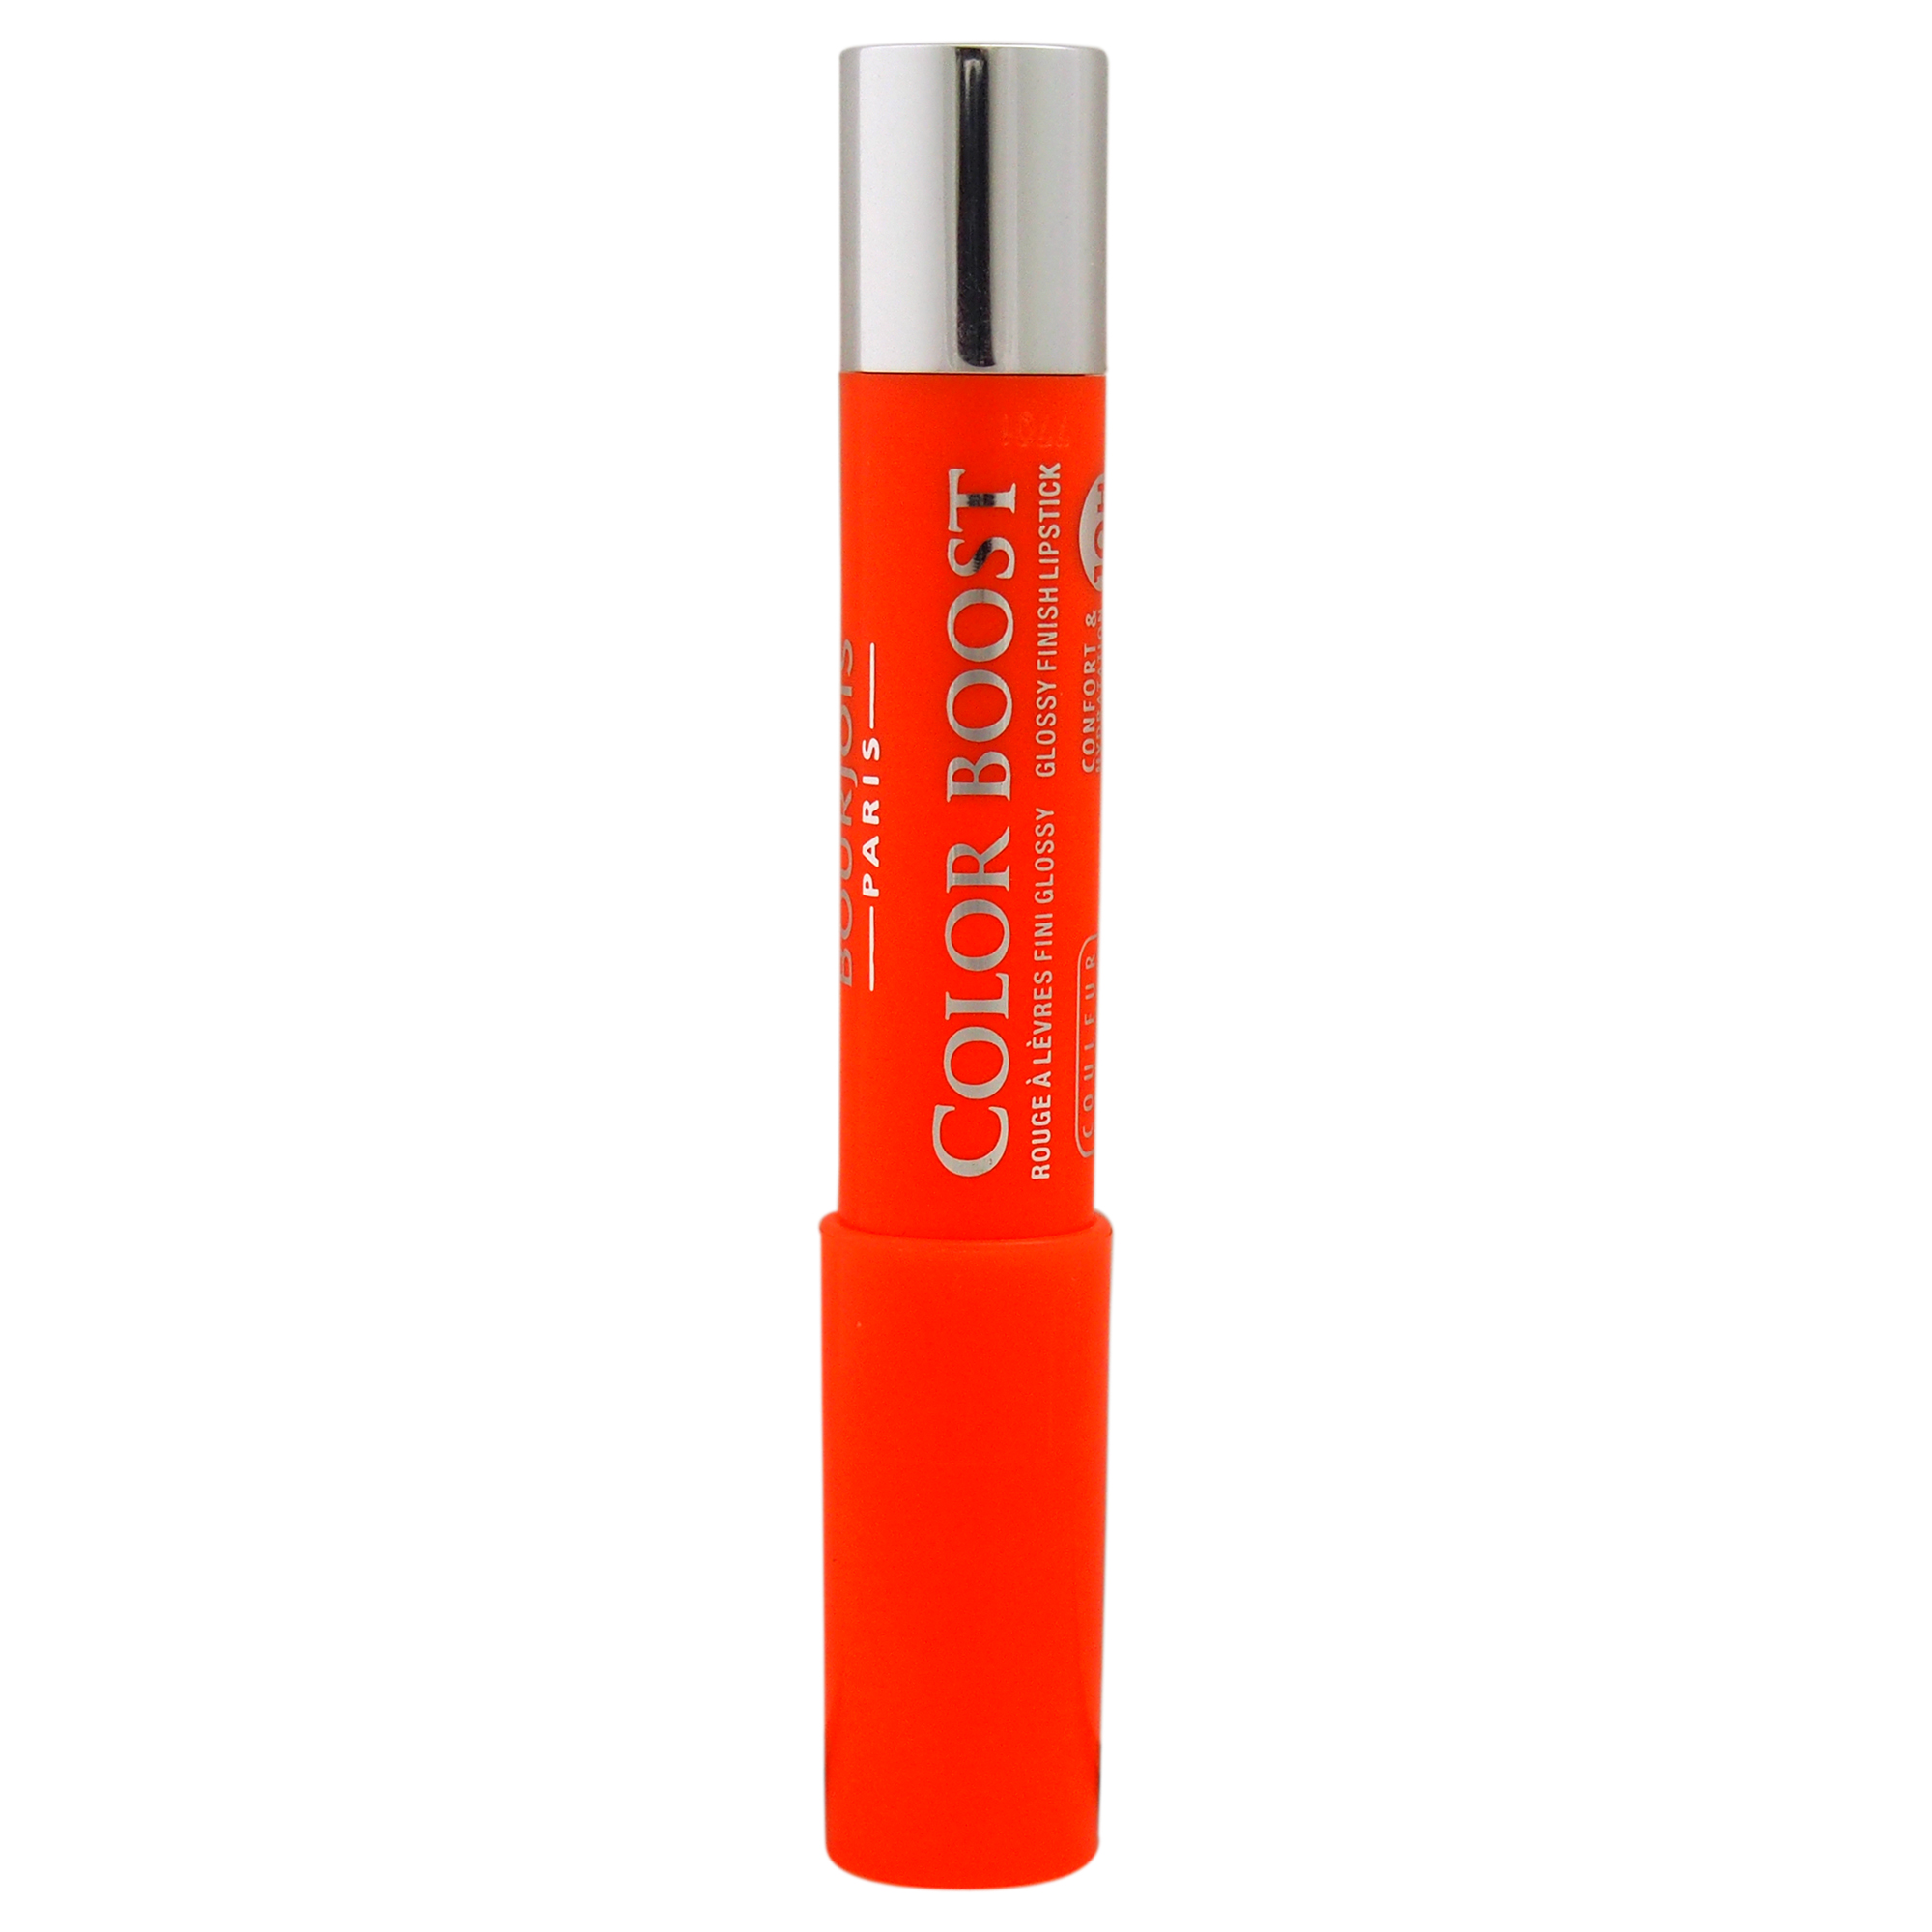 Bourjois Color Boost Lipstick SPF 15 - # 03 Orange Punch by  for Women - 0.1 oz Lipstick